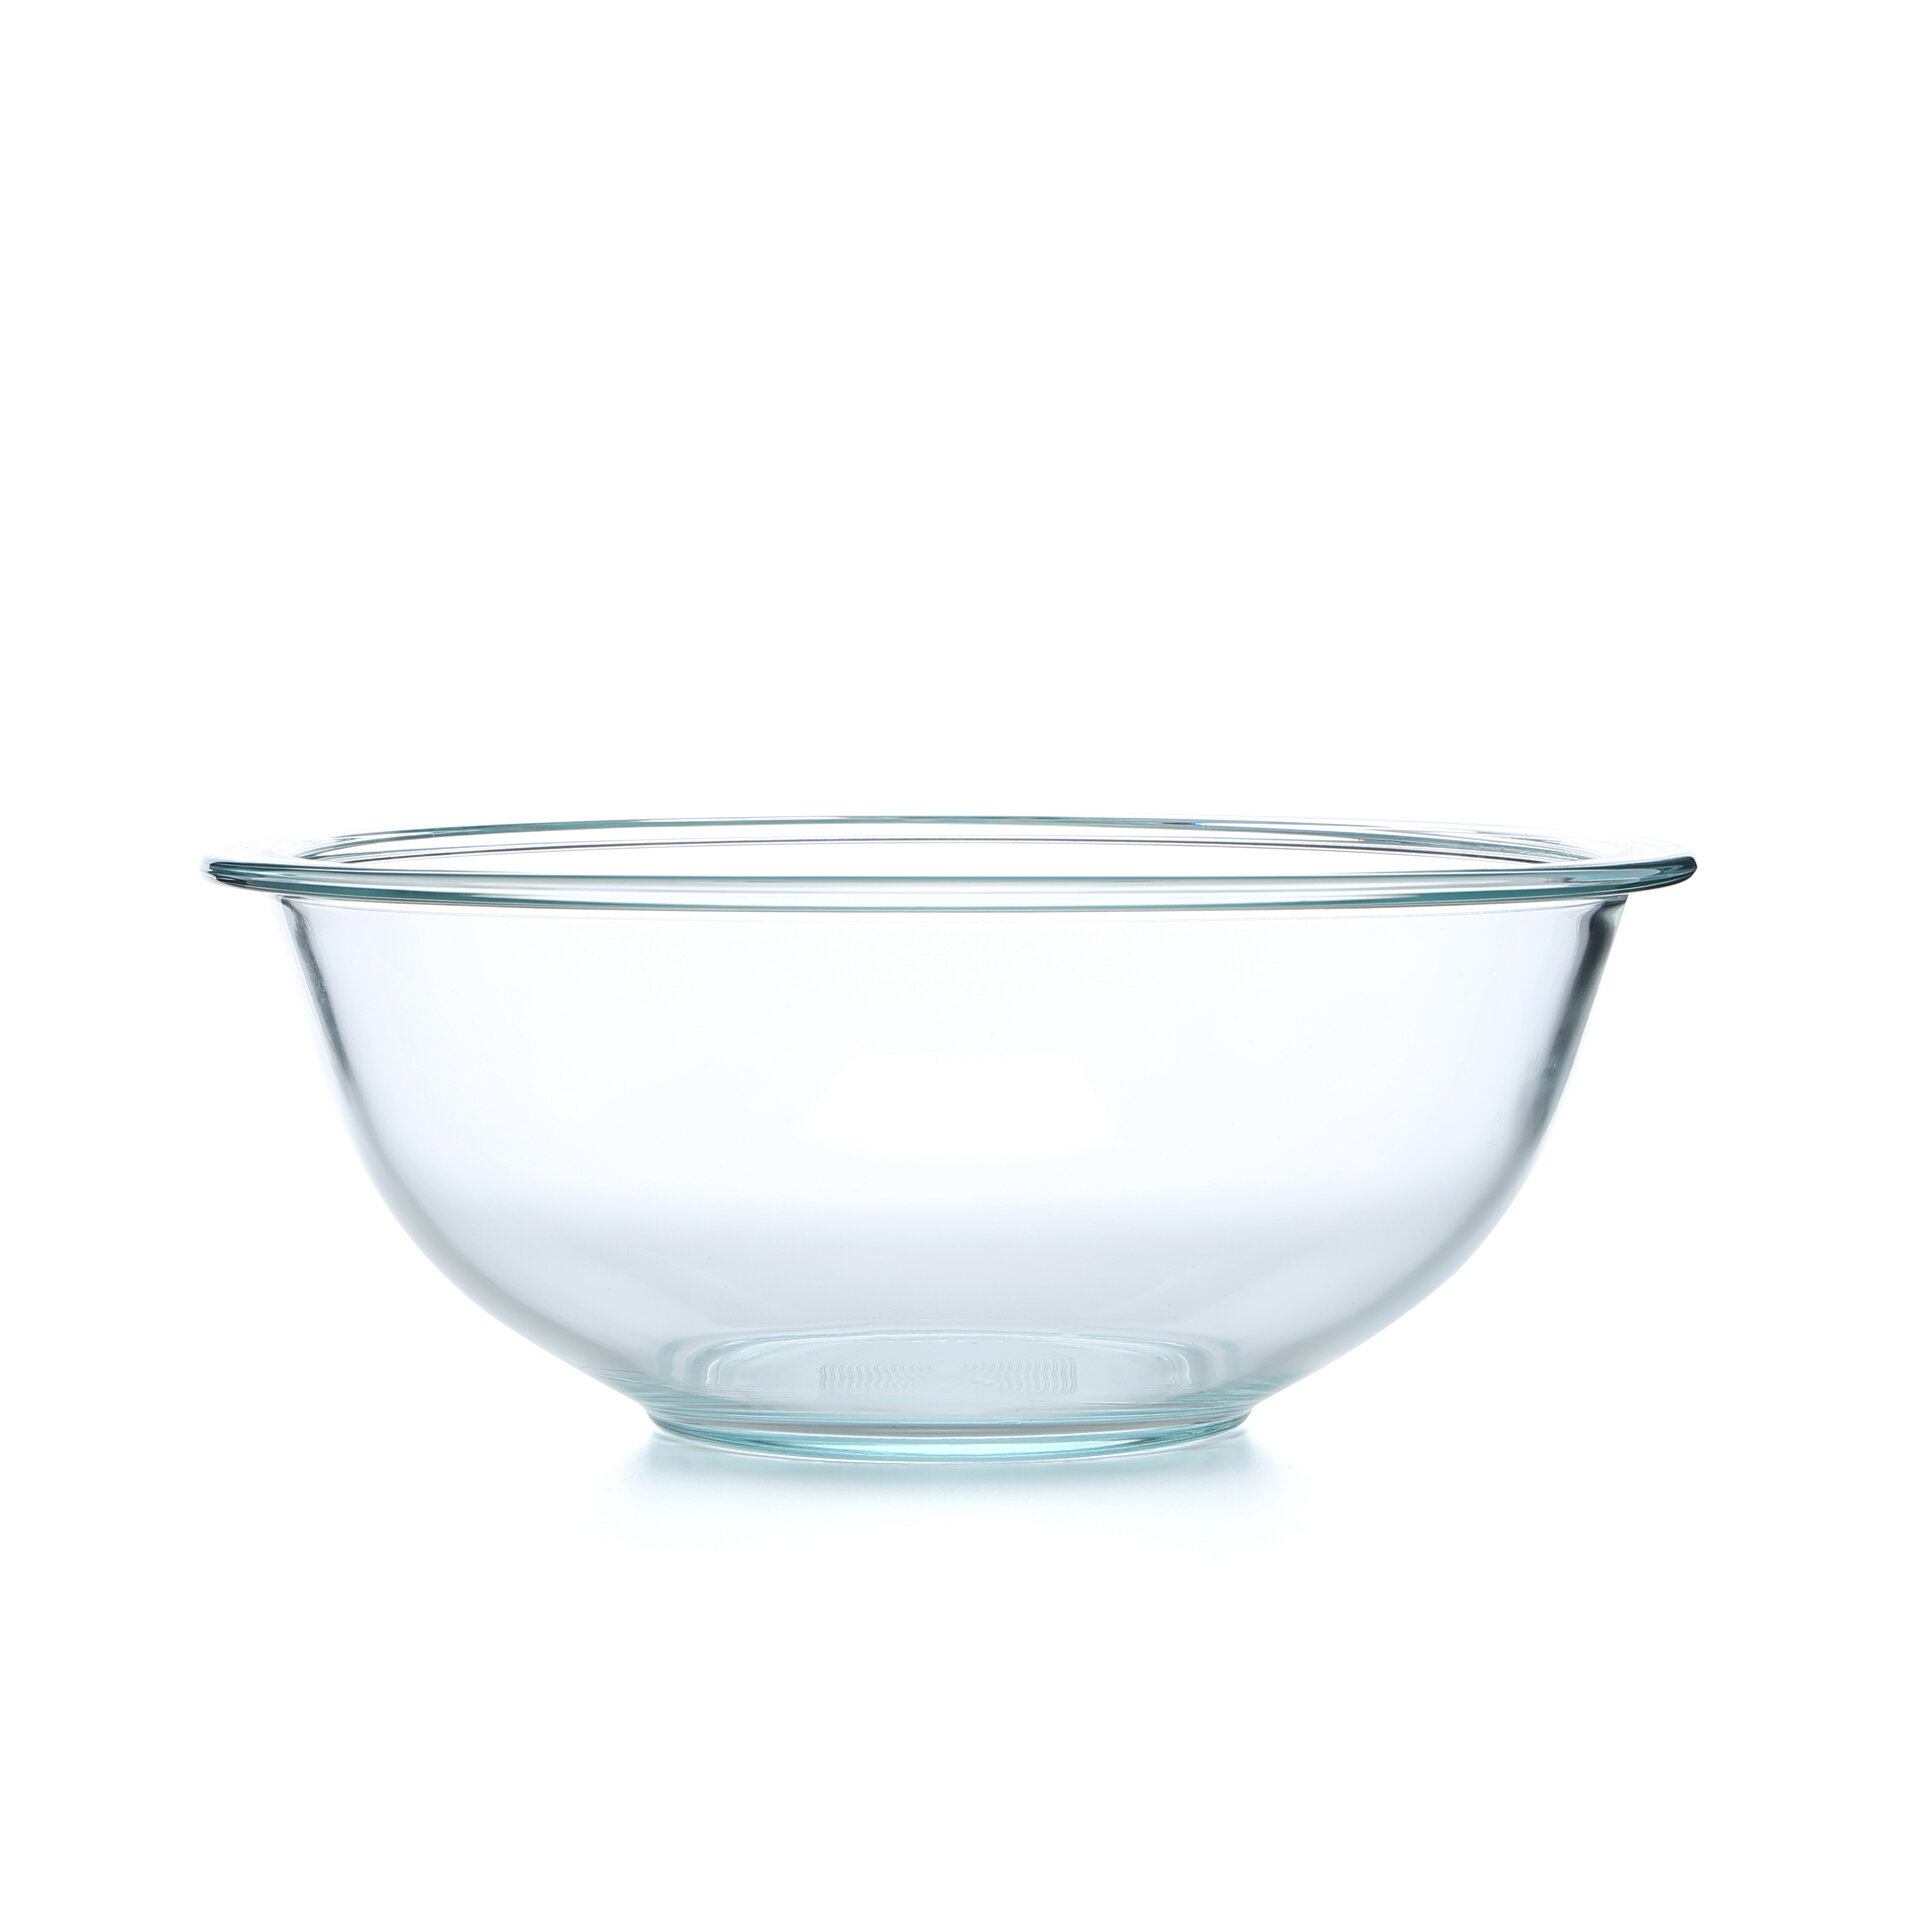 Pyrex Prepware Glass Mixing Bowl & Reviews | Wayfair